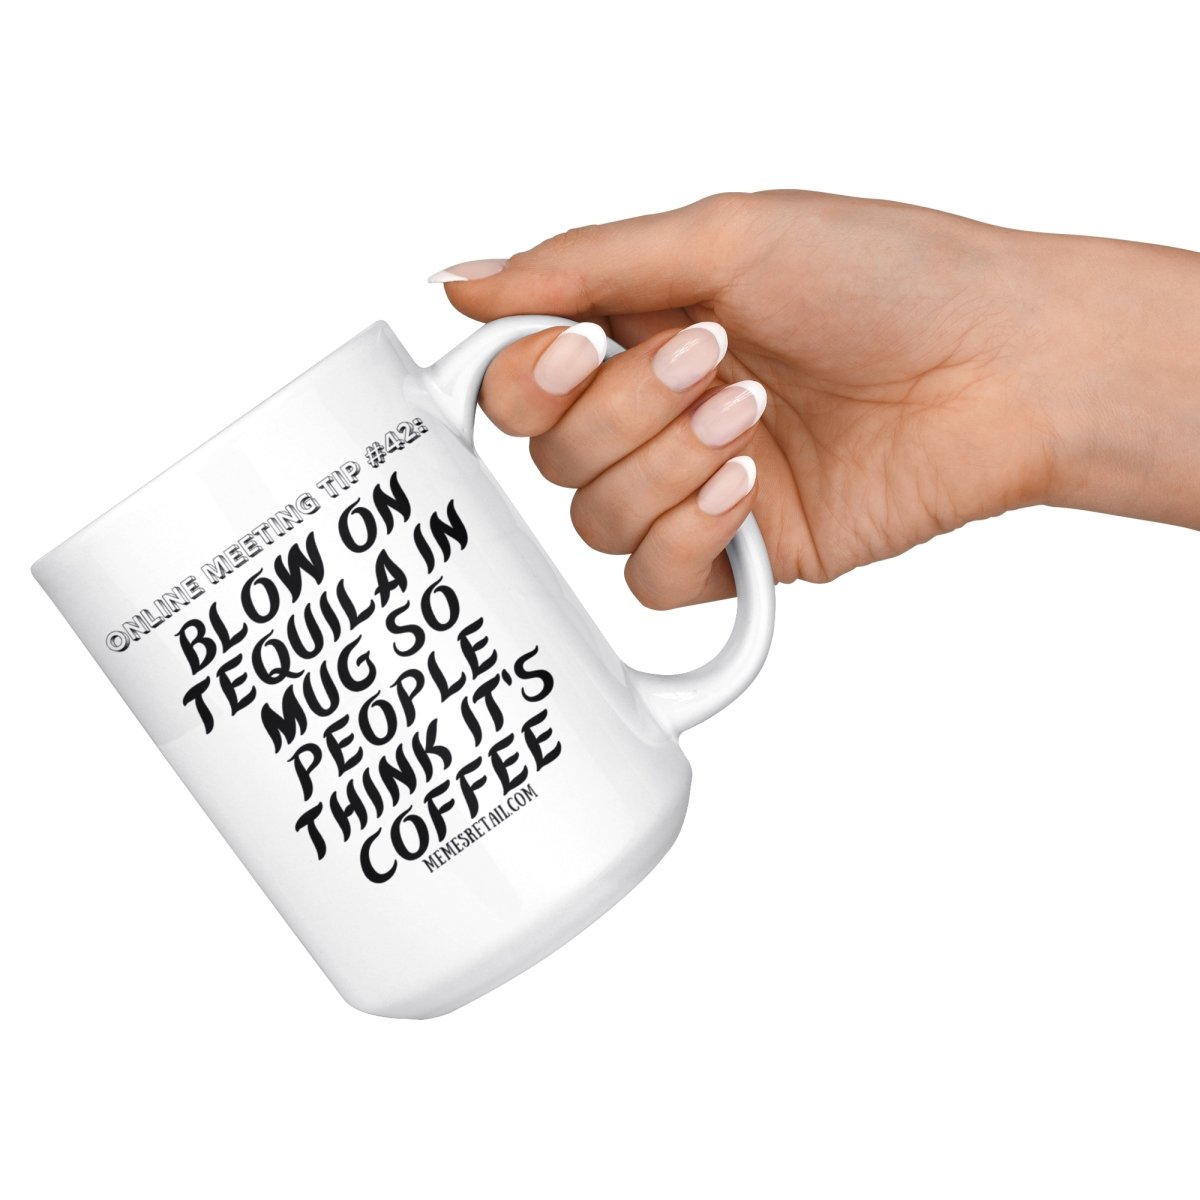 Online Meeting Tip #42 Blow On Tequila in Mug So People Think It's Coffee 15 oz Mug, - MemesRetail.com